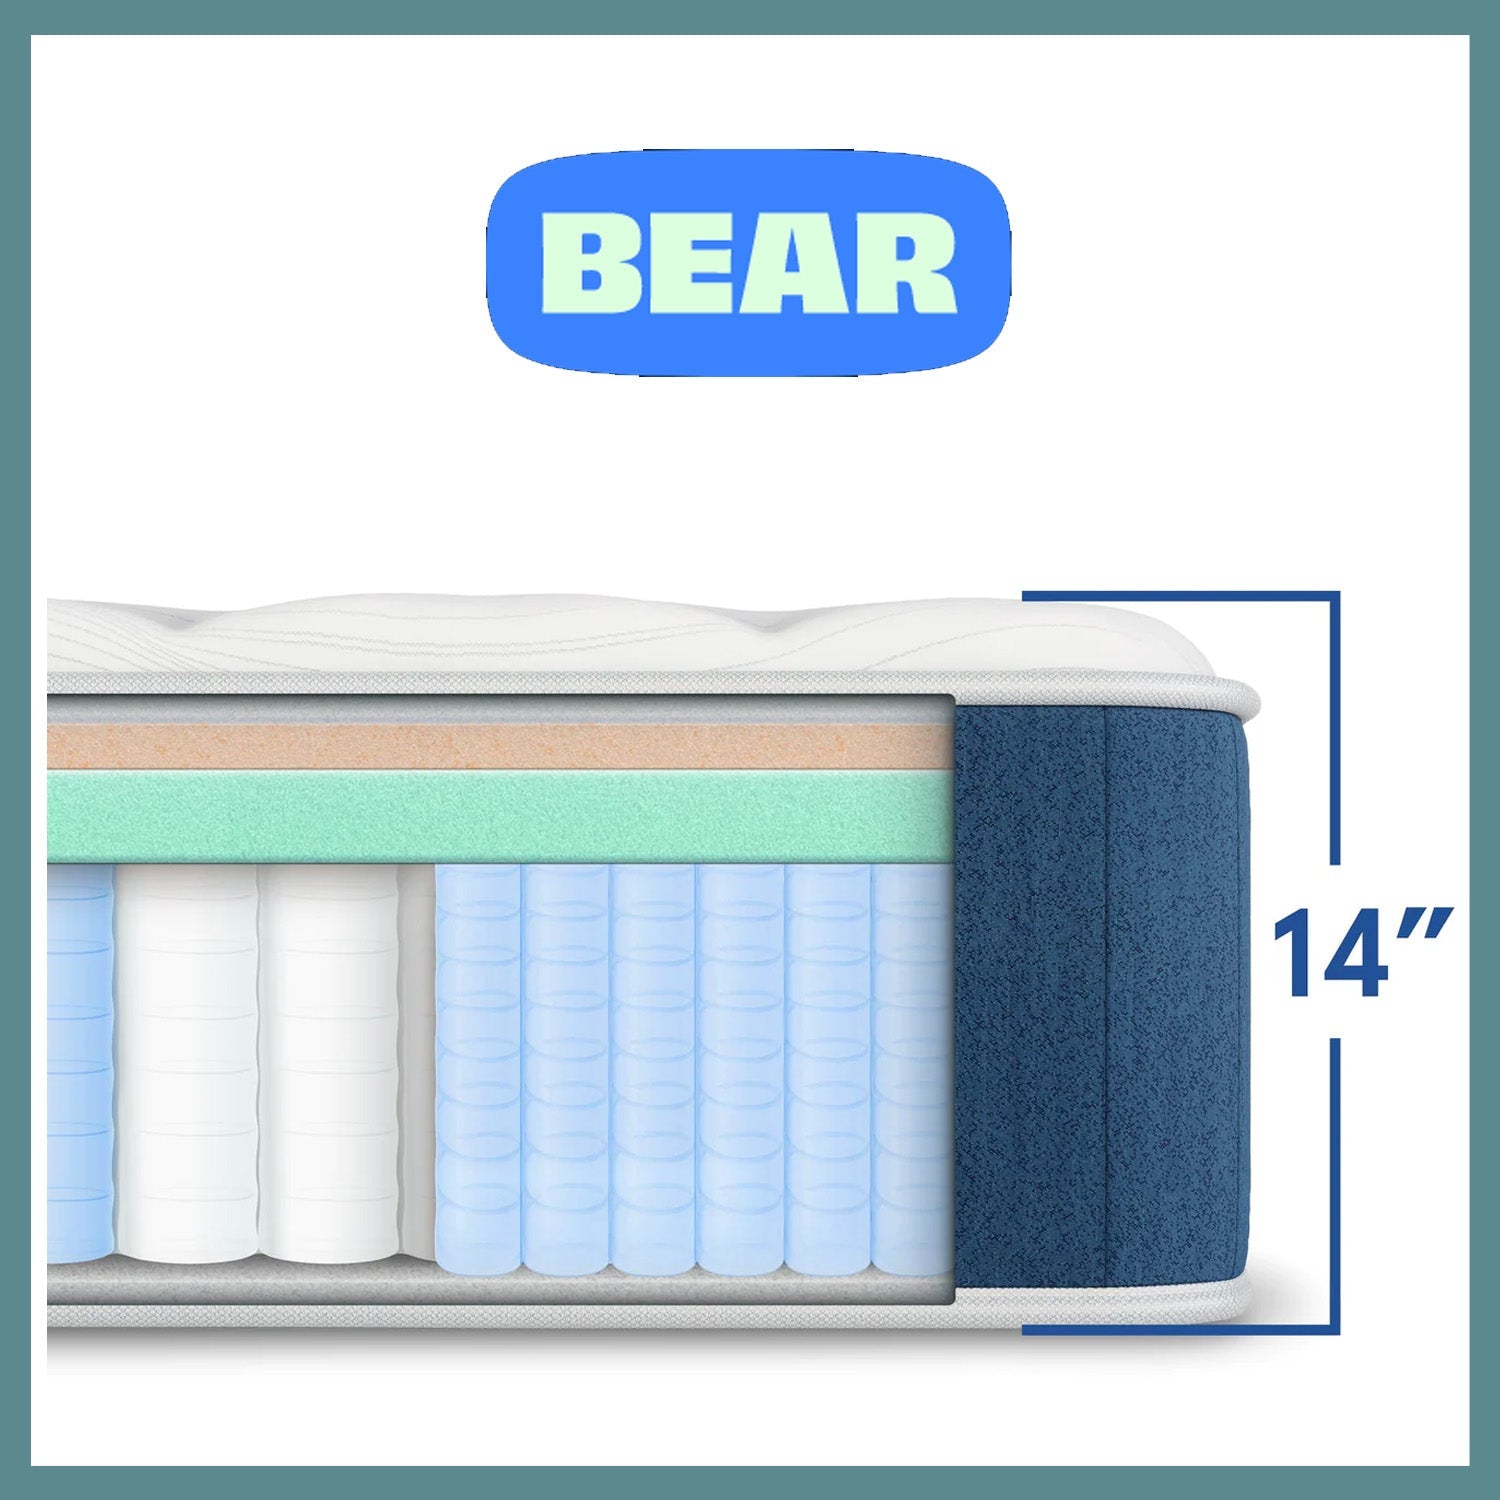 Bear Elite Hybrid Mattress - Medium